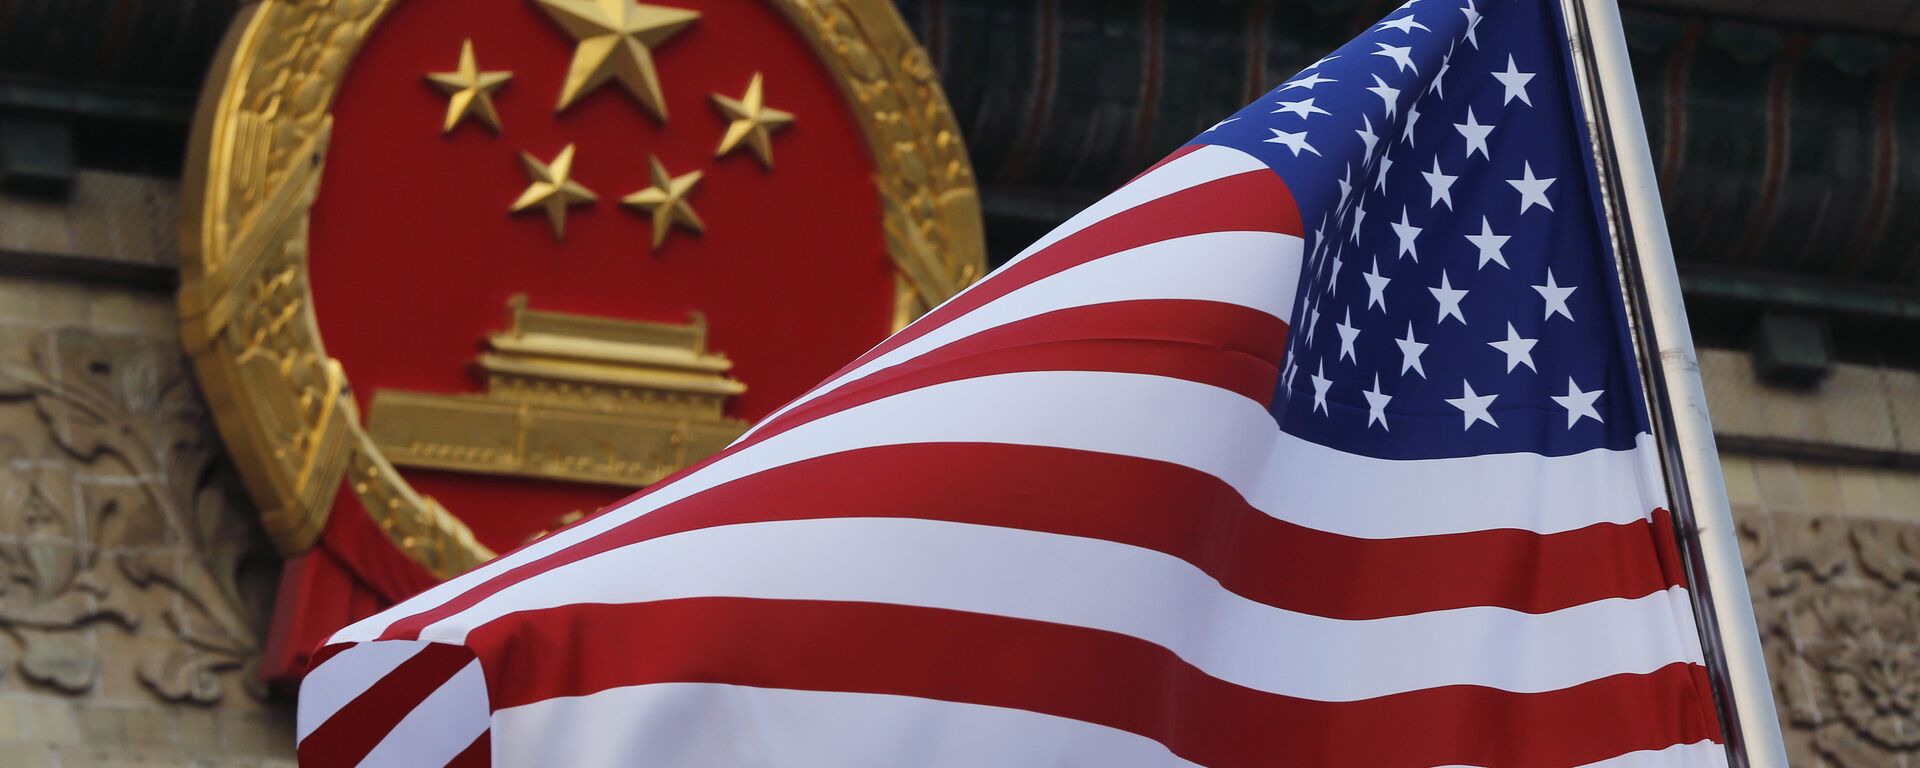 La bandera de EEUU y el emblema de China  - Sputnik Mundo, 1920, 25.11.2021